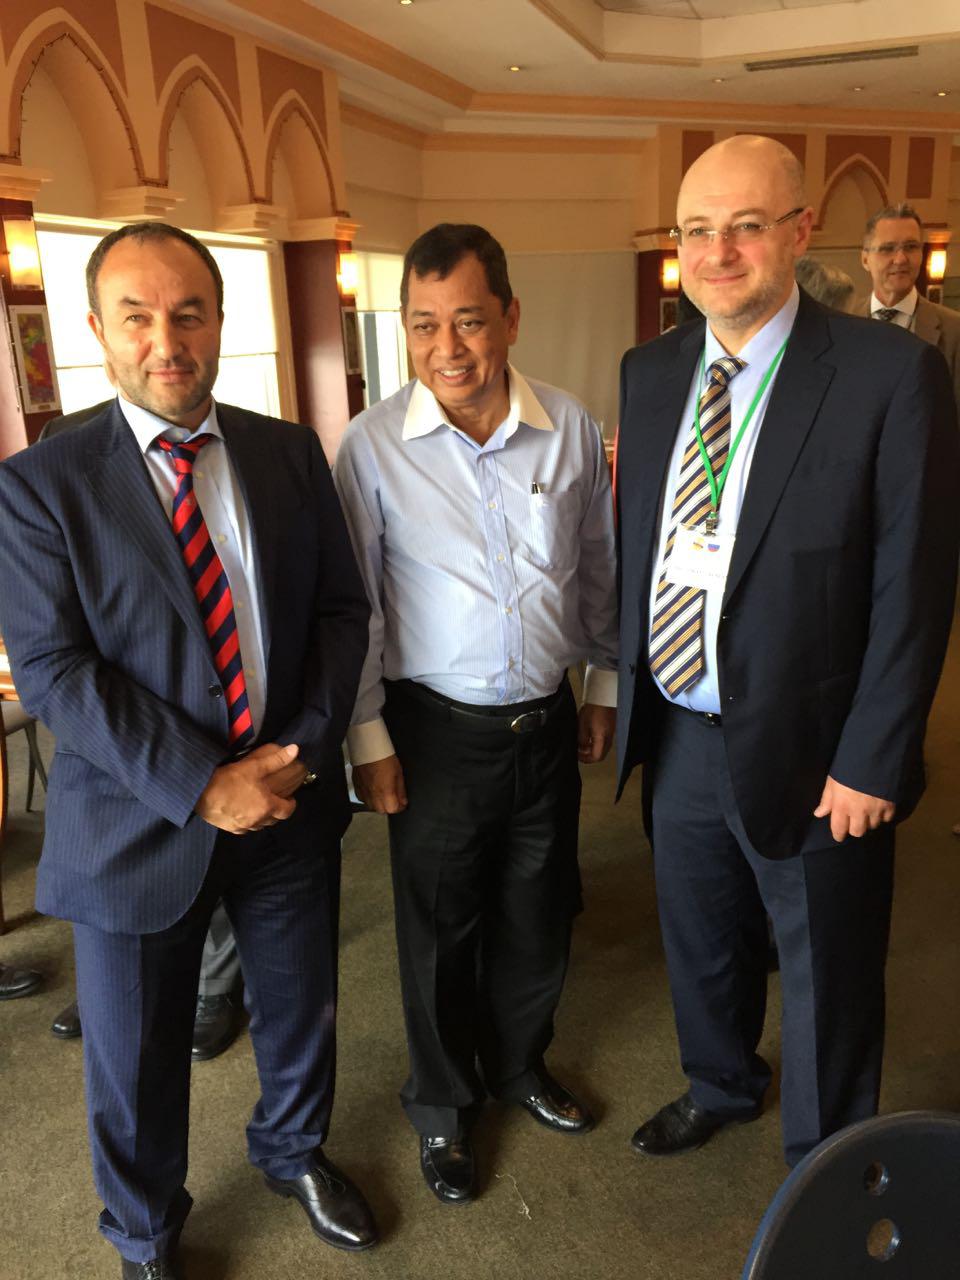 The NNIAT founders Arasul Batchaev and Ruslan Tokaev with the Minister of industry and energy Haji Muhammad Yasmin bin Haji Umar